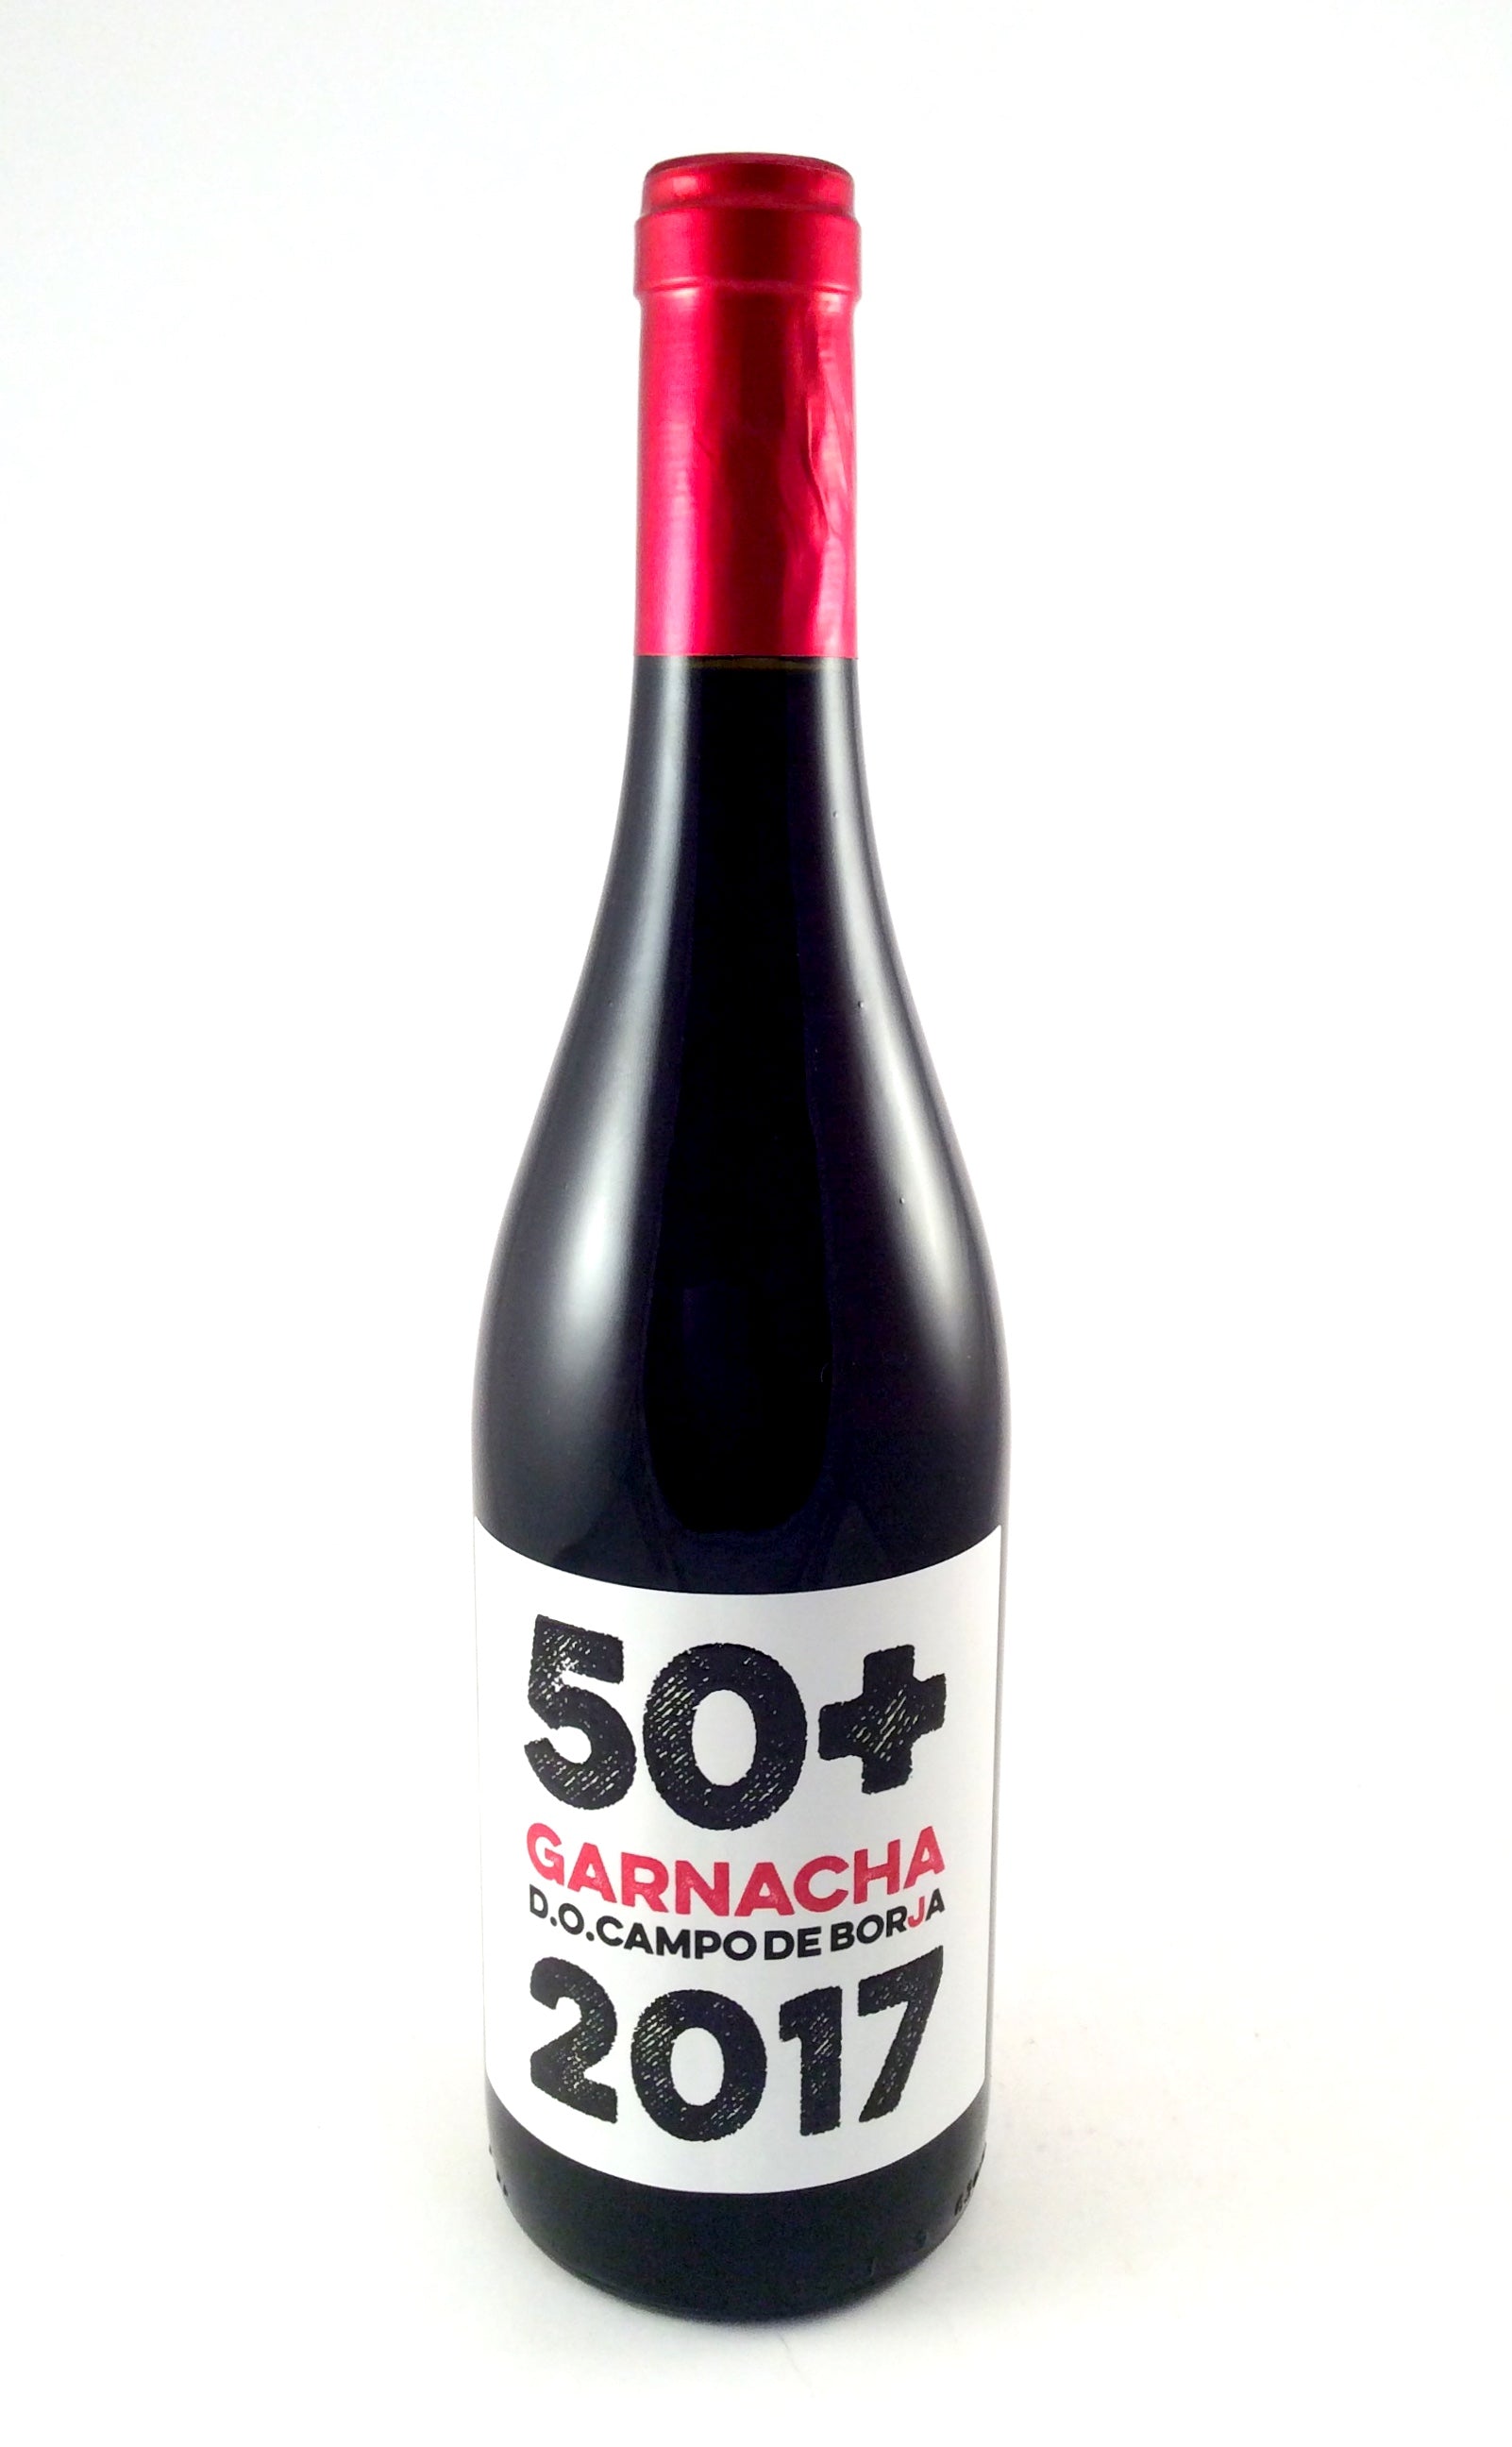 Bodegas Santo Cristo 50+ Garnacha - Wineseeker